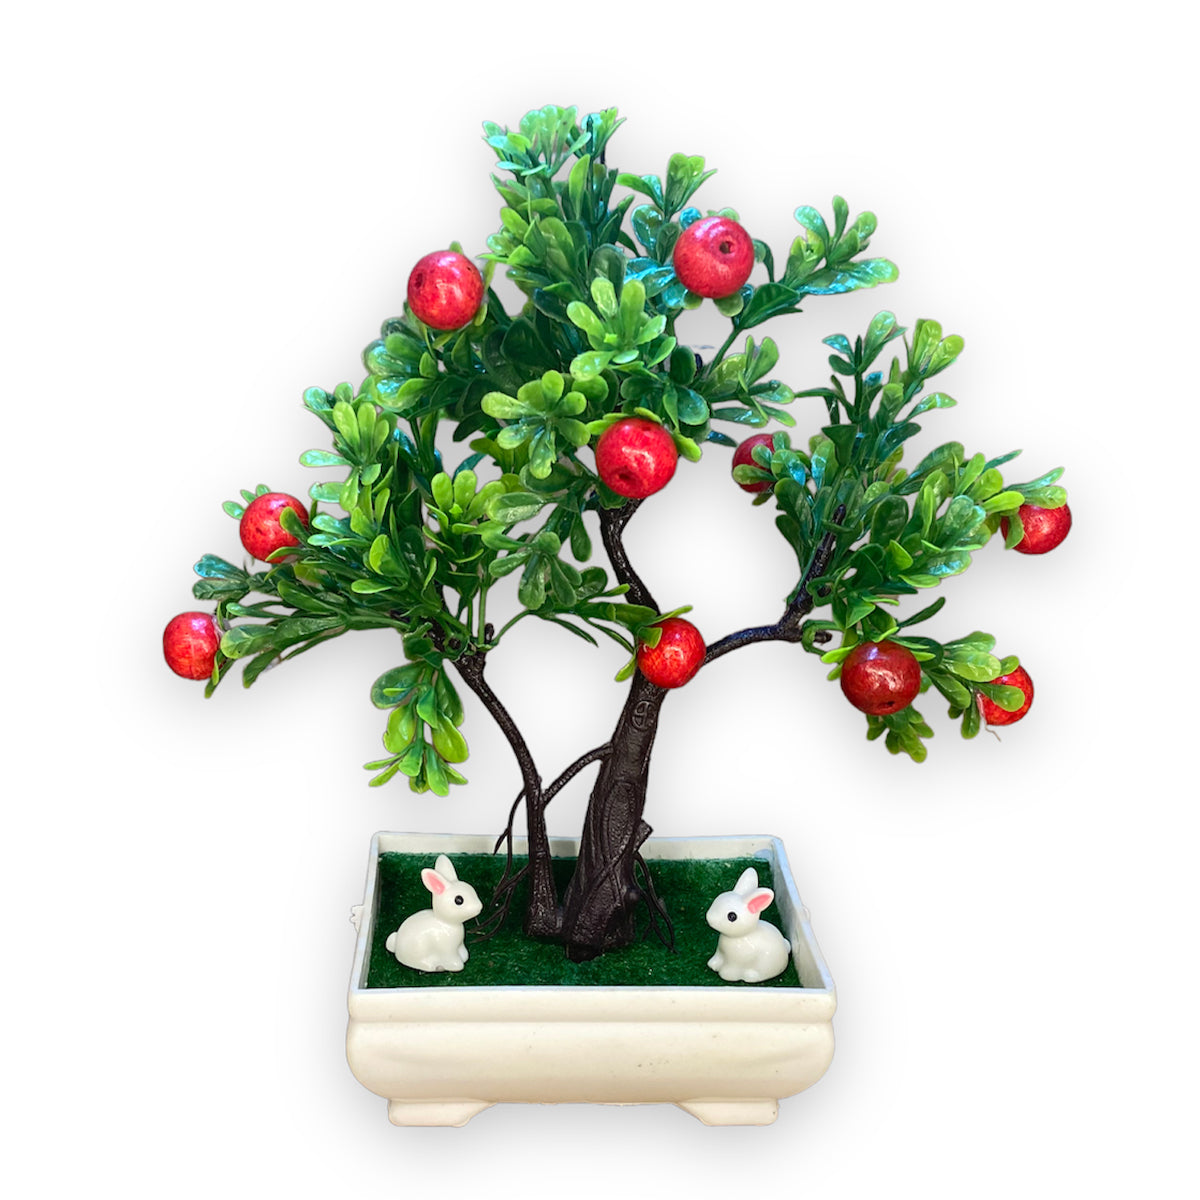 Rakakart- beautiful bonsai artificial plant with mini rabbits for home decor